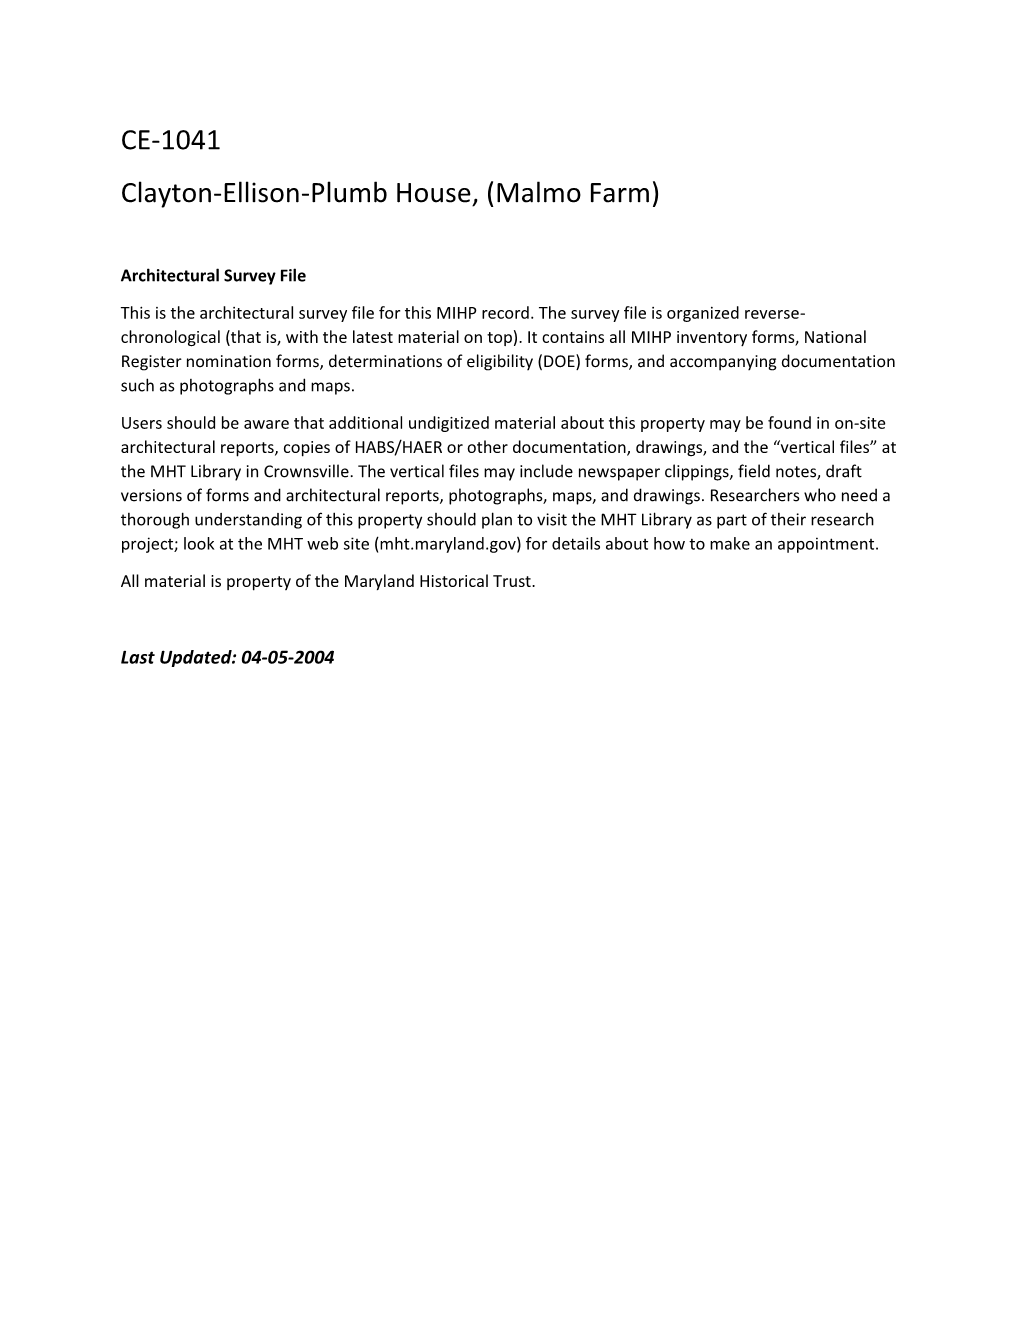 CE-1041 Clayton-Ellison-Plumb House, (Malmo Farm)